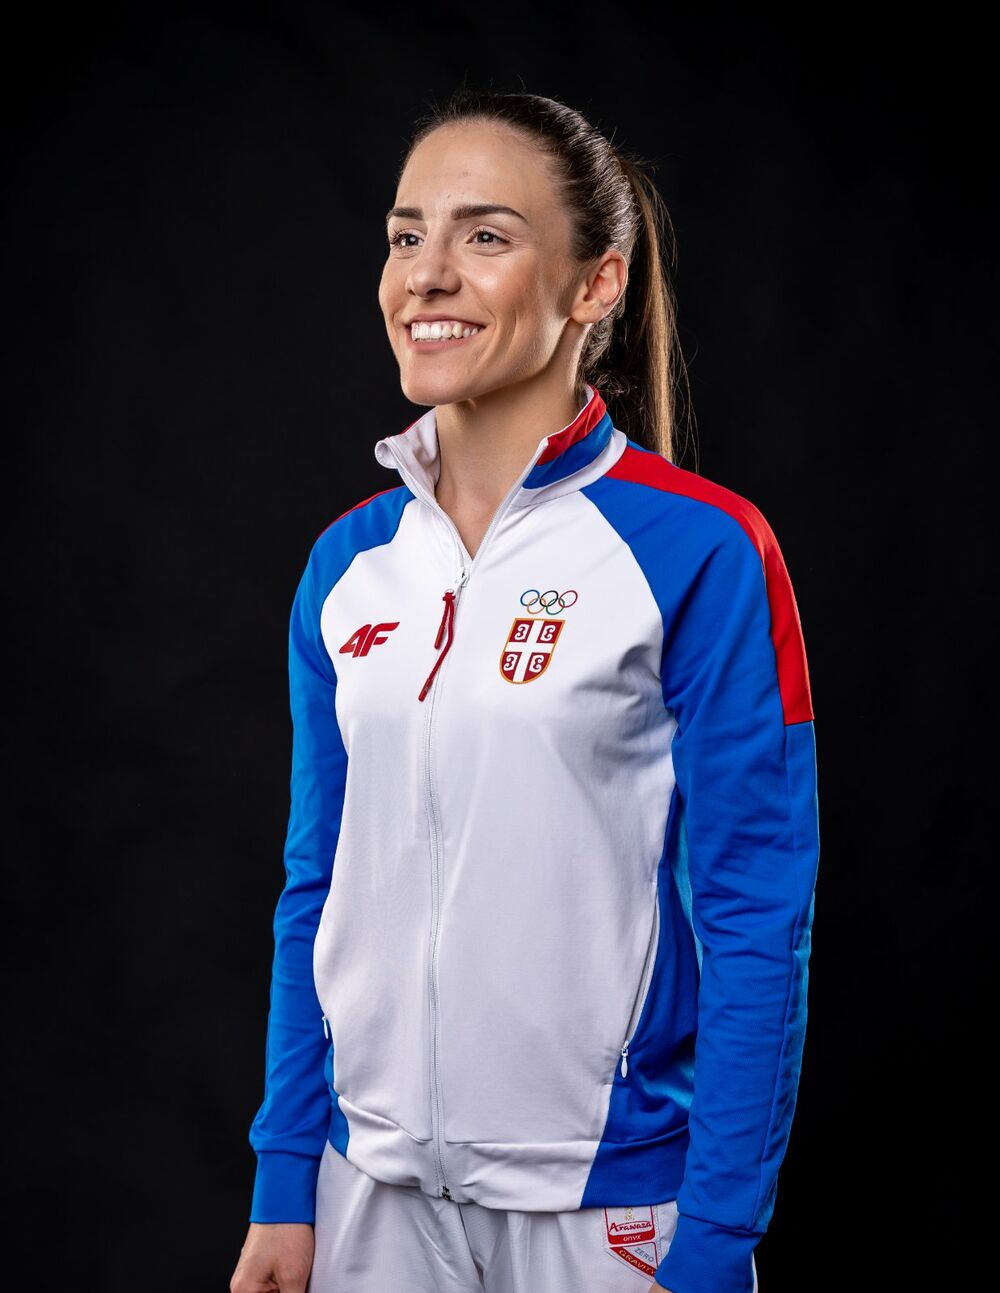 Jovana Preković